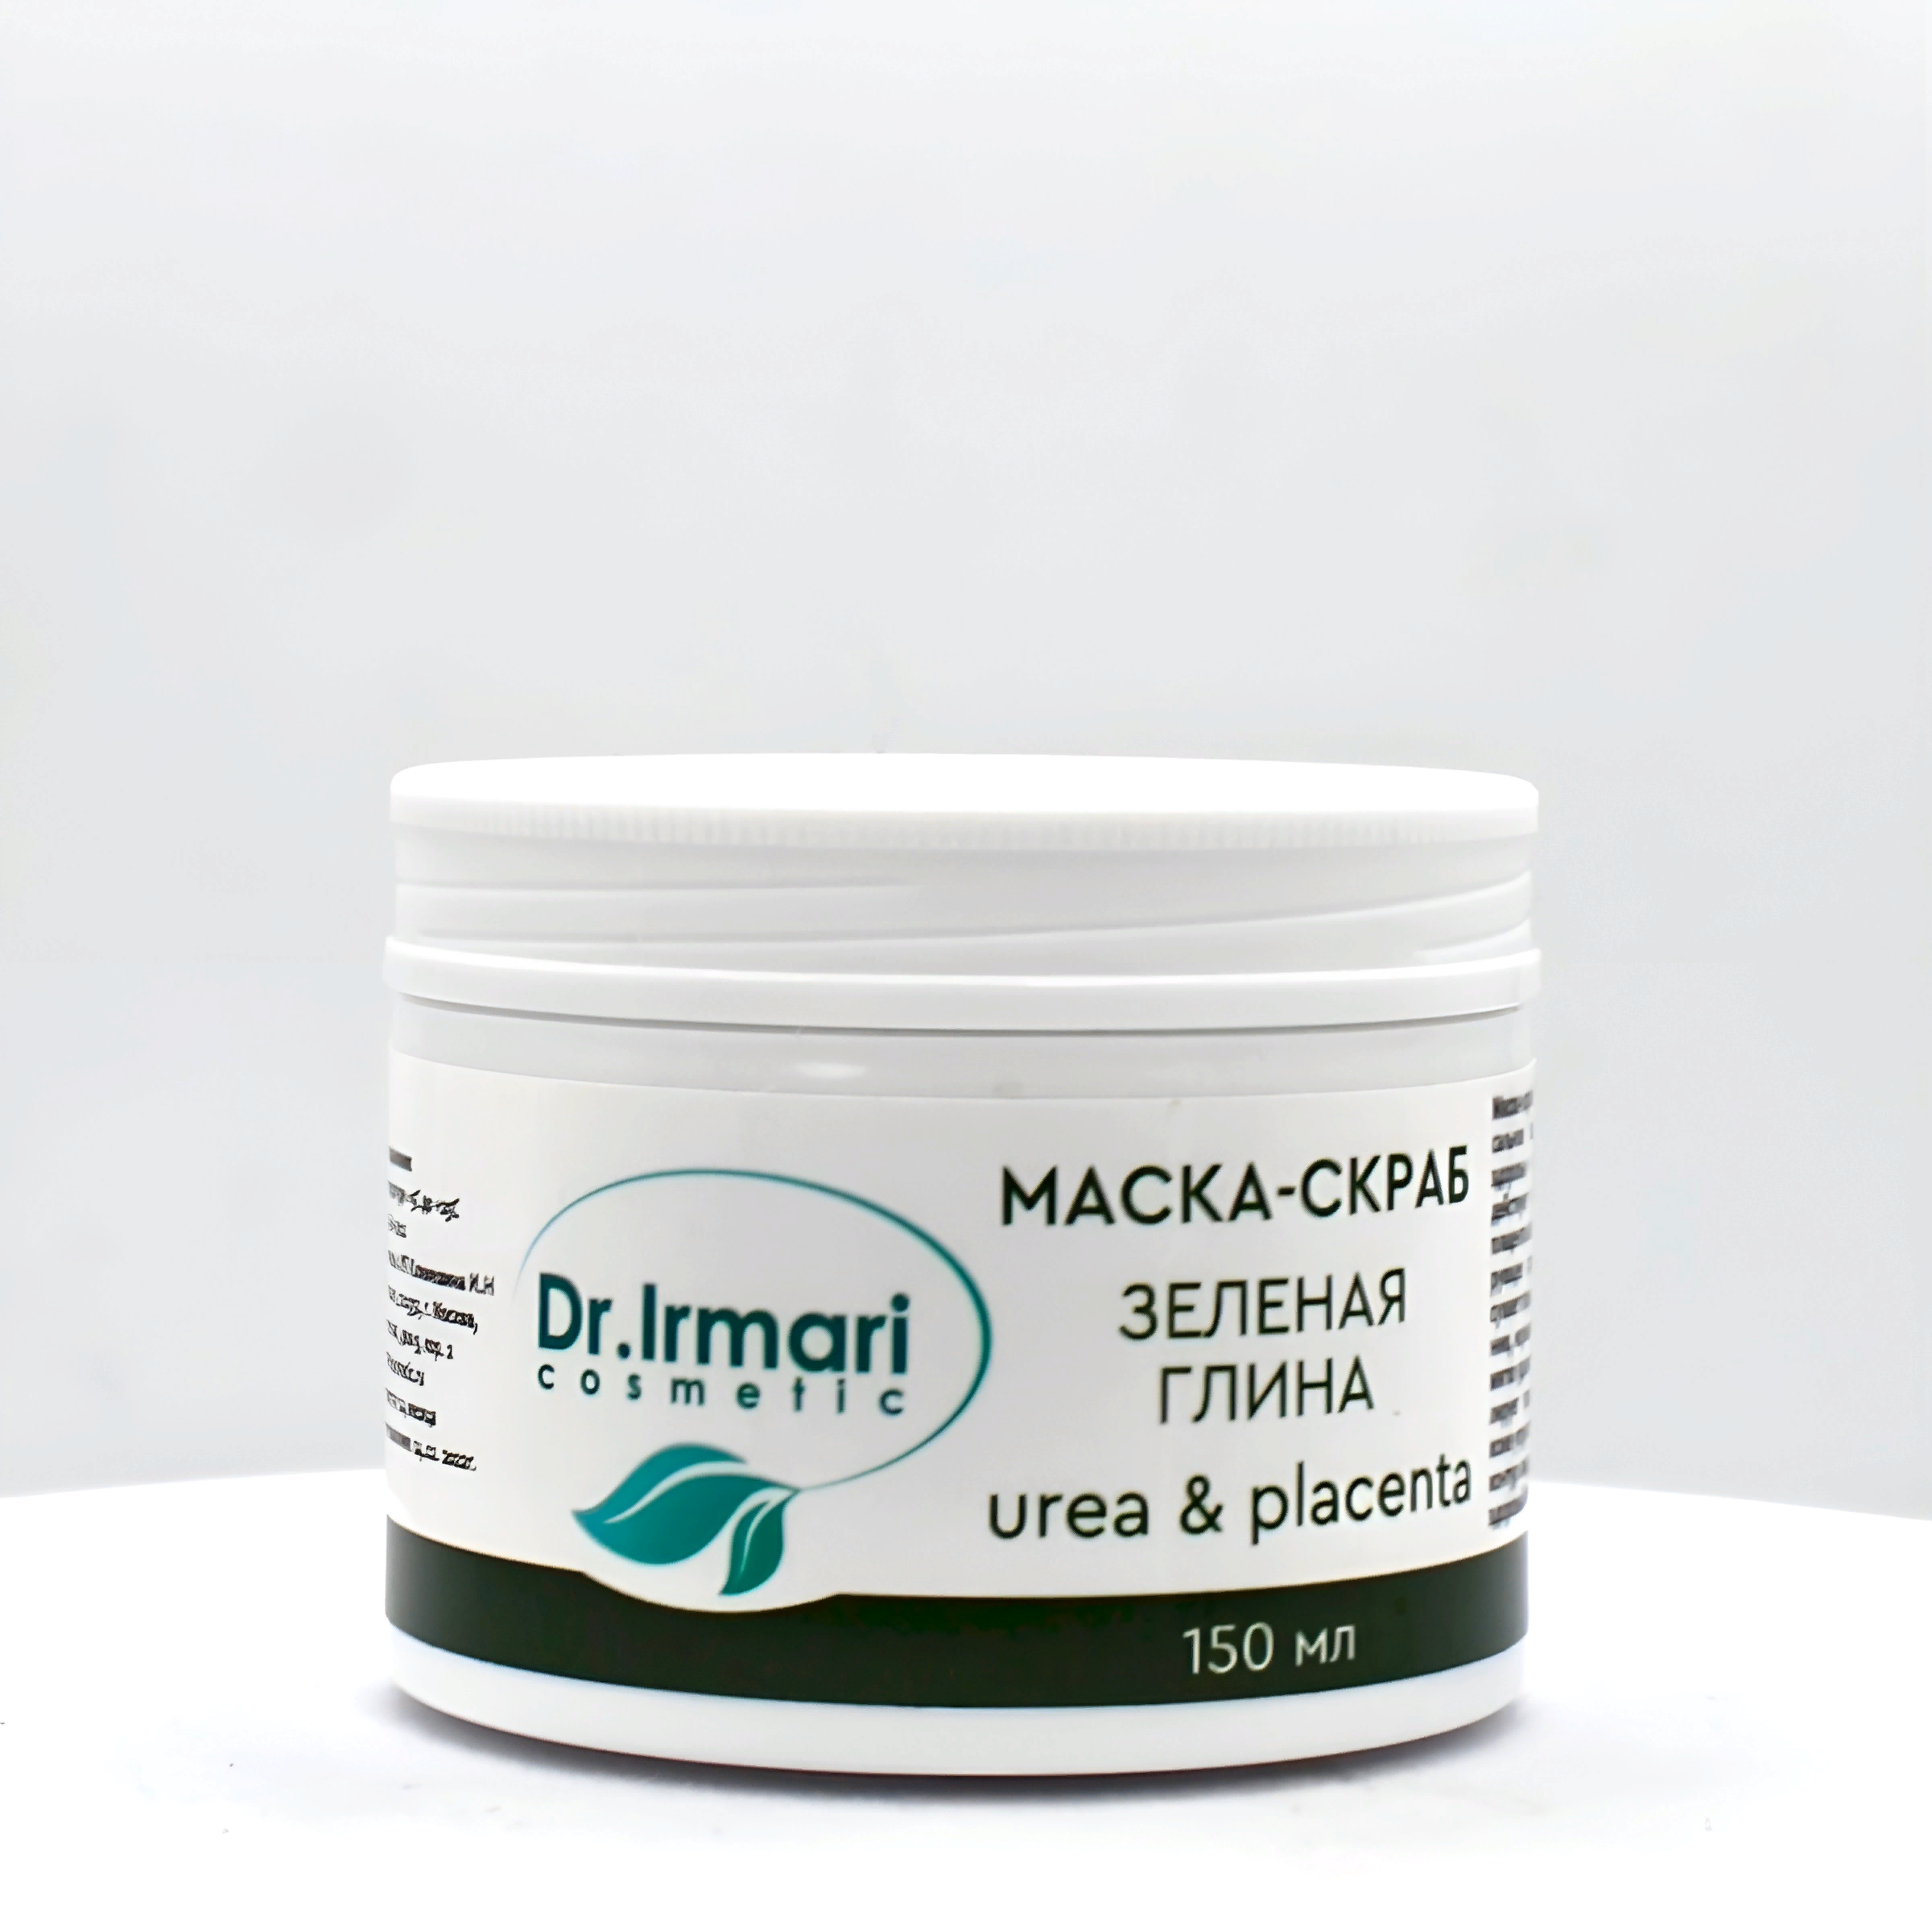 Маска-скраб Dr.Irmari cosmetic Urea & Placenta Зелёная глина 150 мл